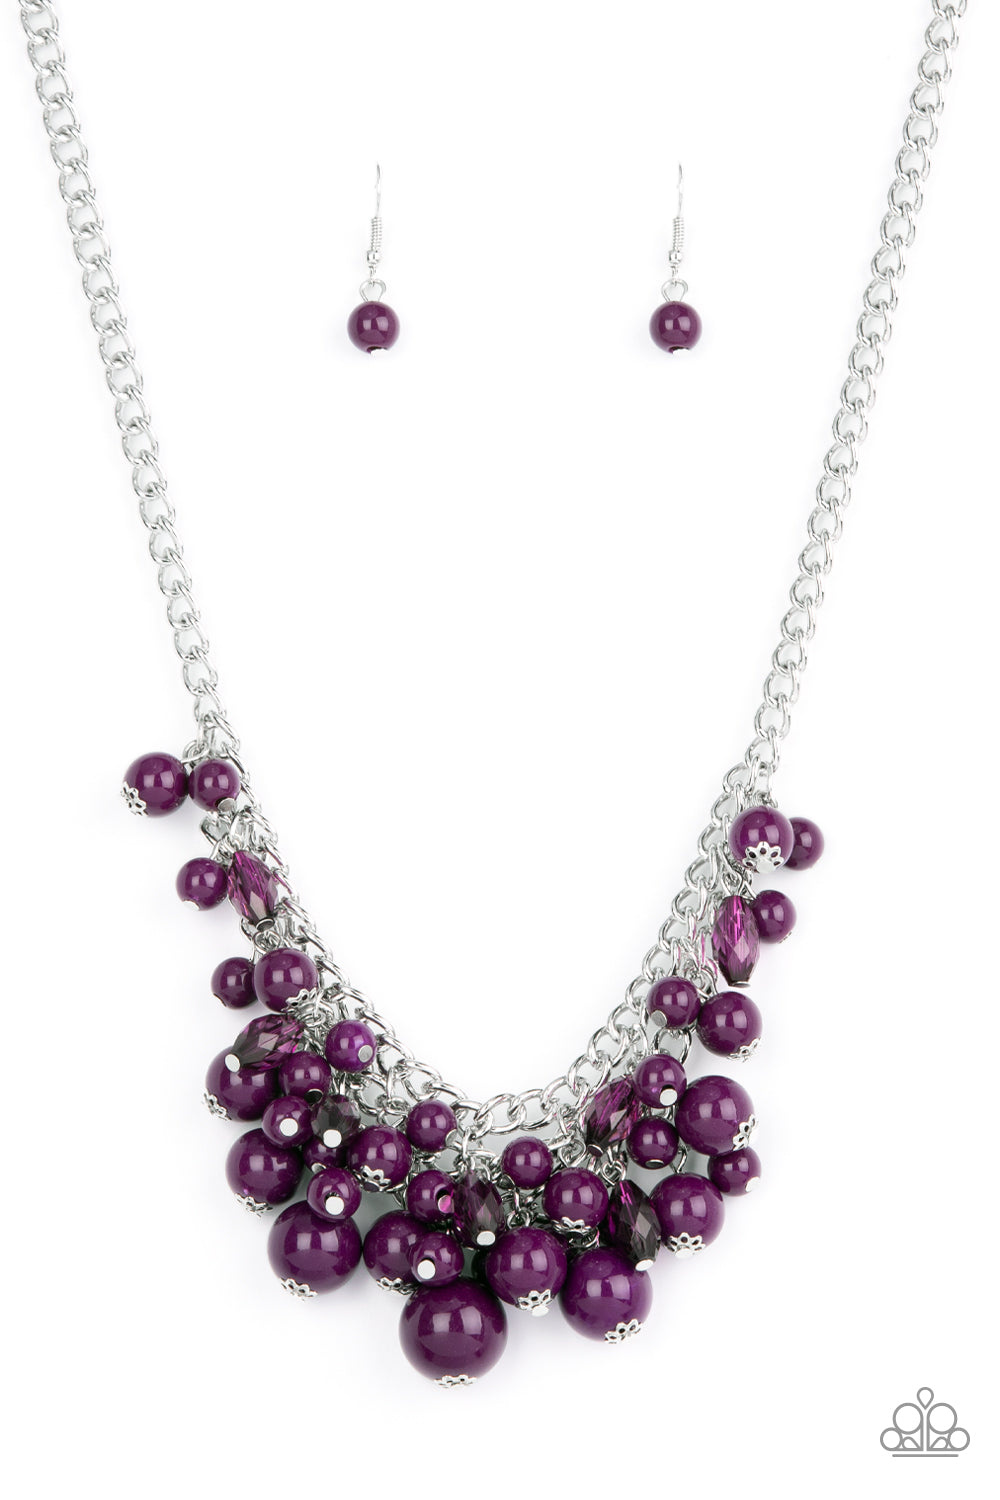 Broadway Bustle - purple - Paparazzi necklace